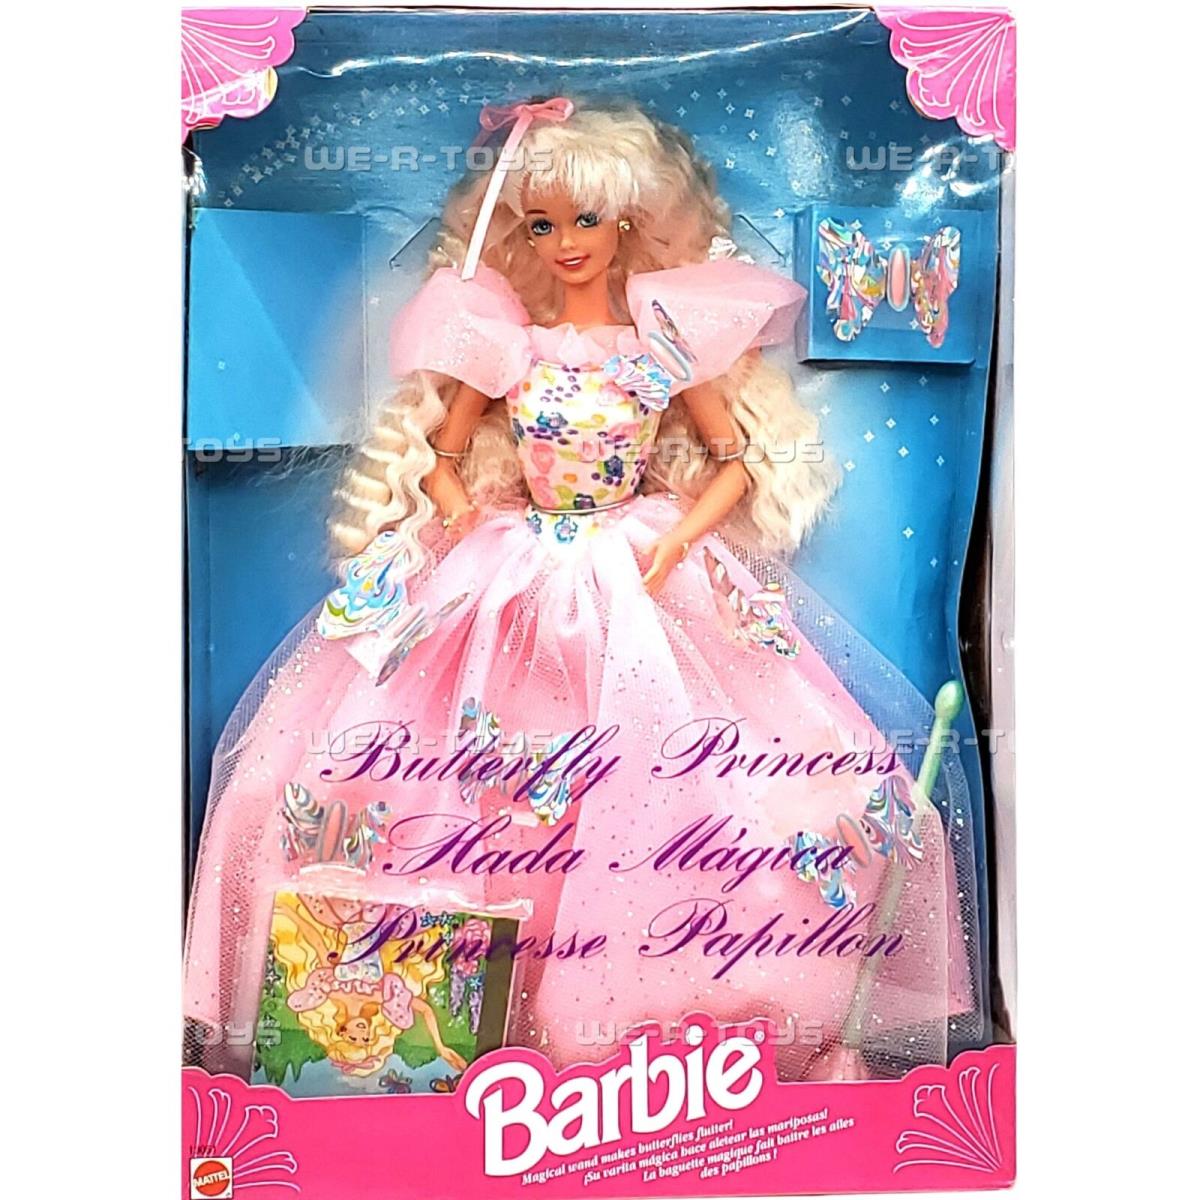 Butterfly Princess Barbie Doll Multilingual Version 1994 Mattel 13051 Nrfb